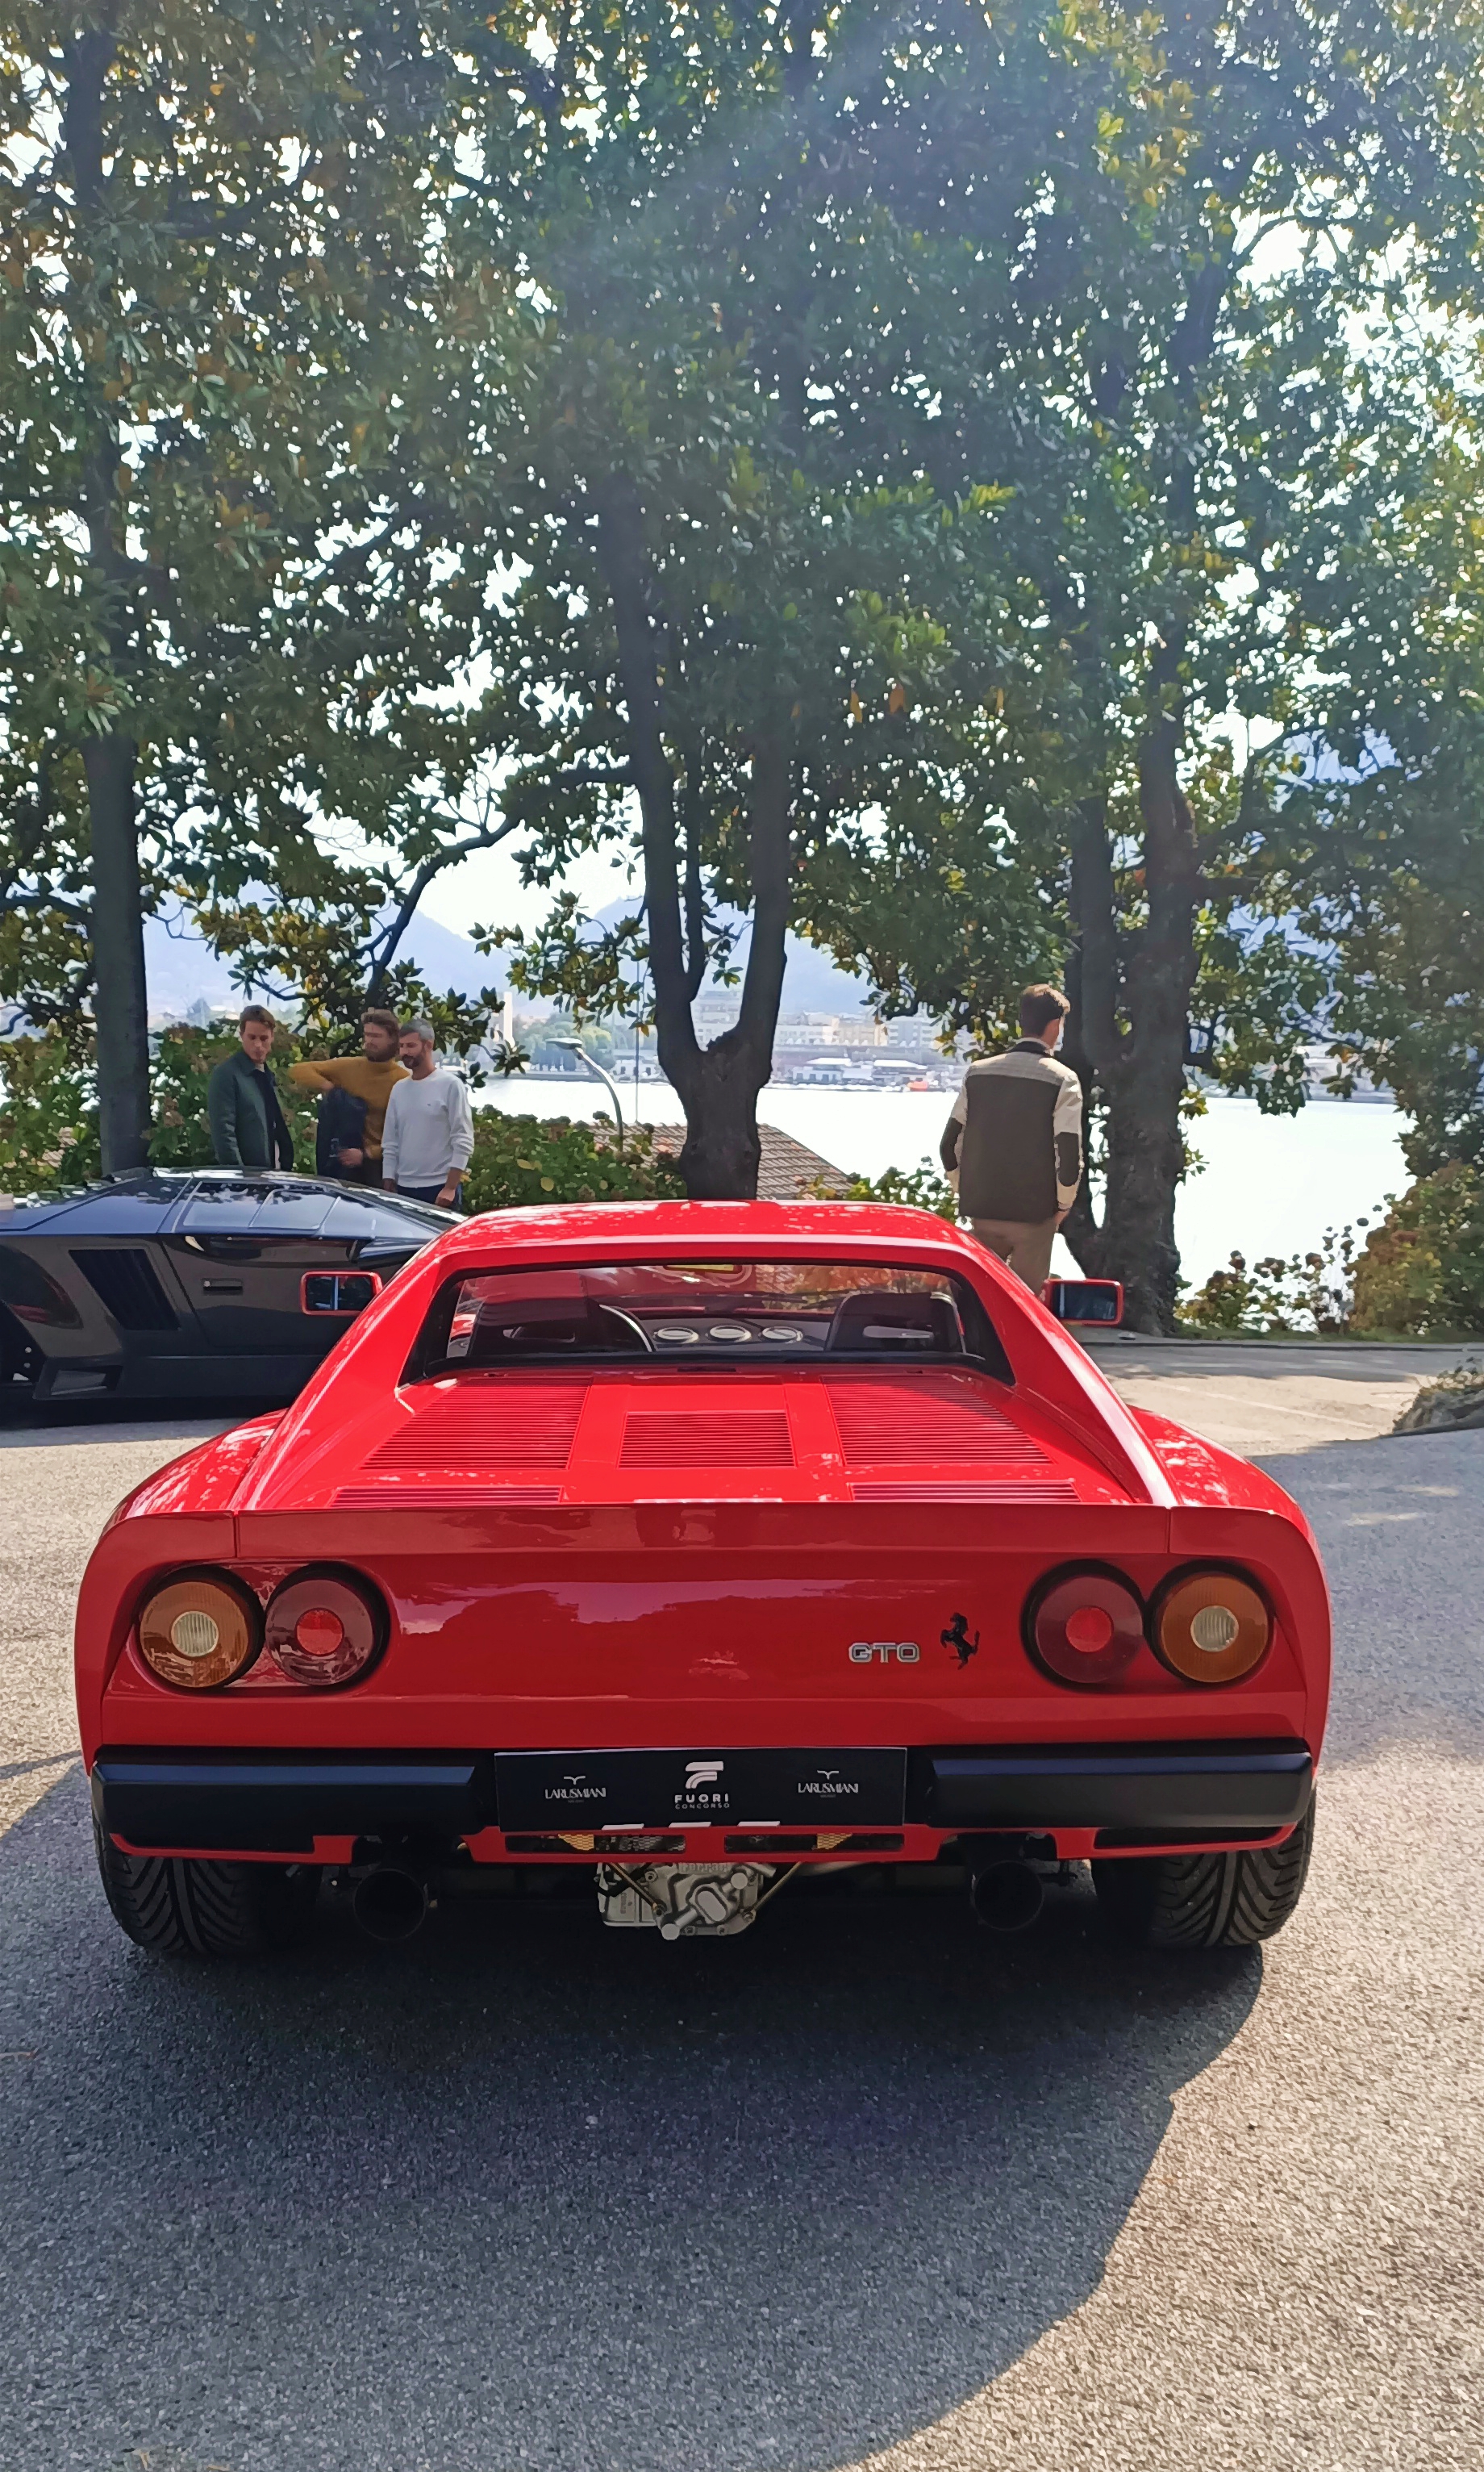 Ferrari288GTO_fuoriconcorso Fuoriconcorso 2021 "Turbo" - SemanalClásico - Revista online de coches clásicos, de colección y sport